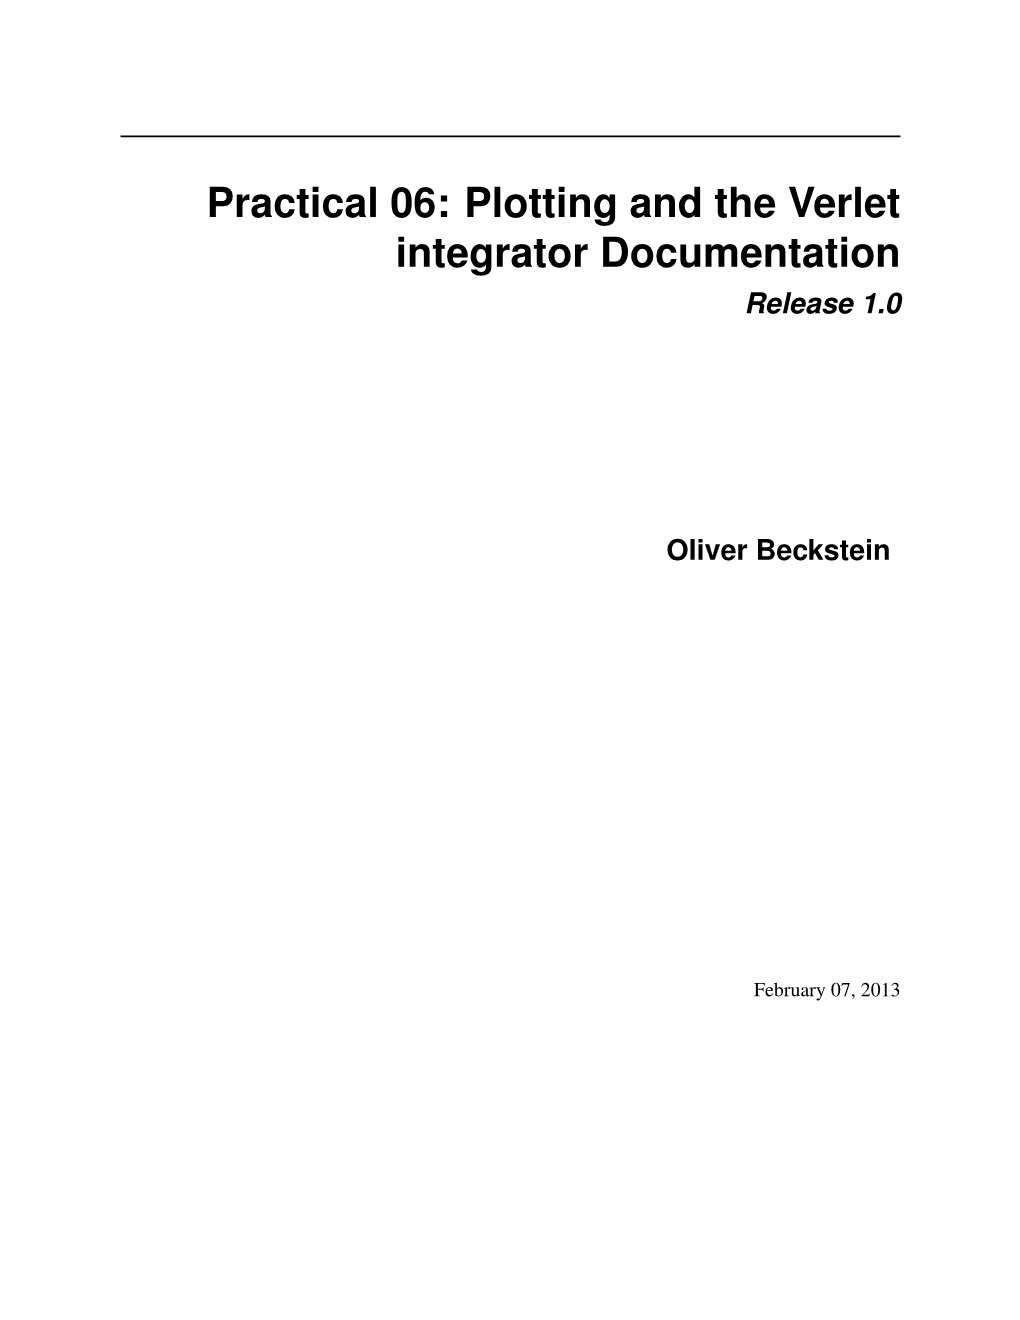 Plotting and the Verlet Integrator Documentation Release 1.0